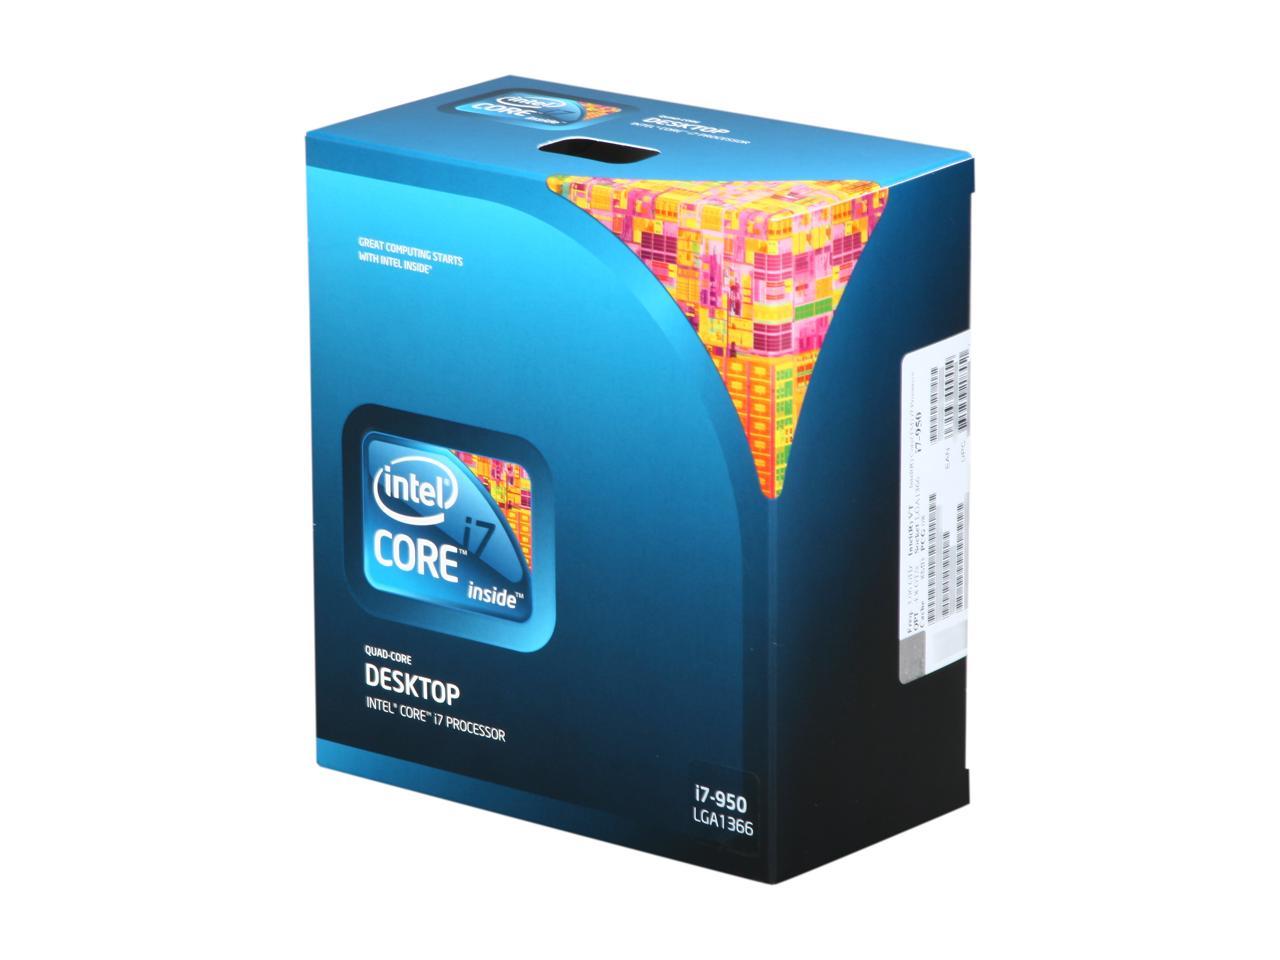 Suitable convenience Shift Intel Core i7-950 - Core i7 Bloomfield Quad-Core 3.06 GHz LGA 1366 130W  Processor - BX80601950 - Newegg.com